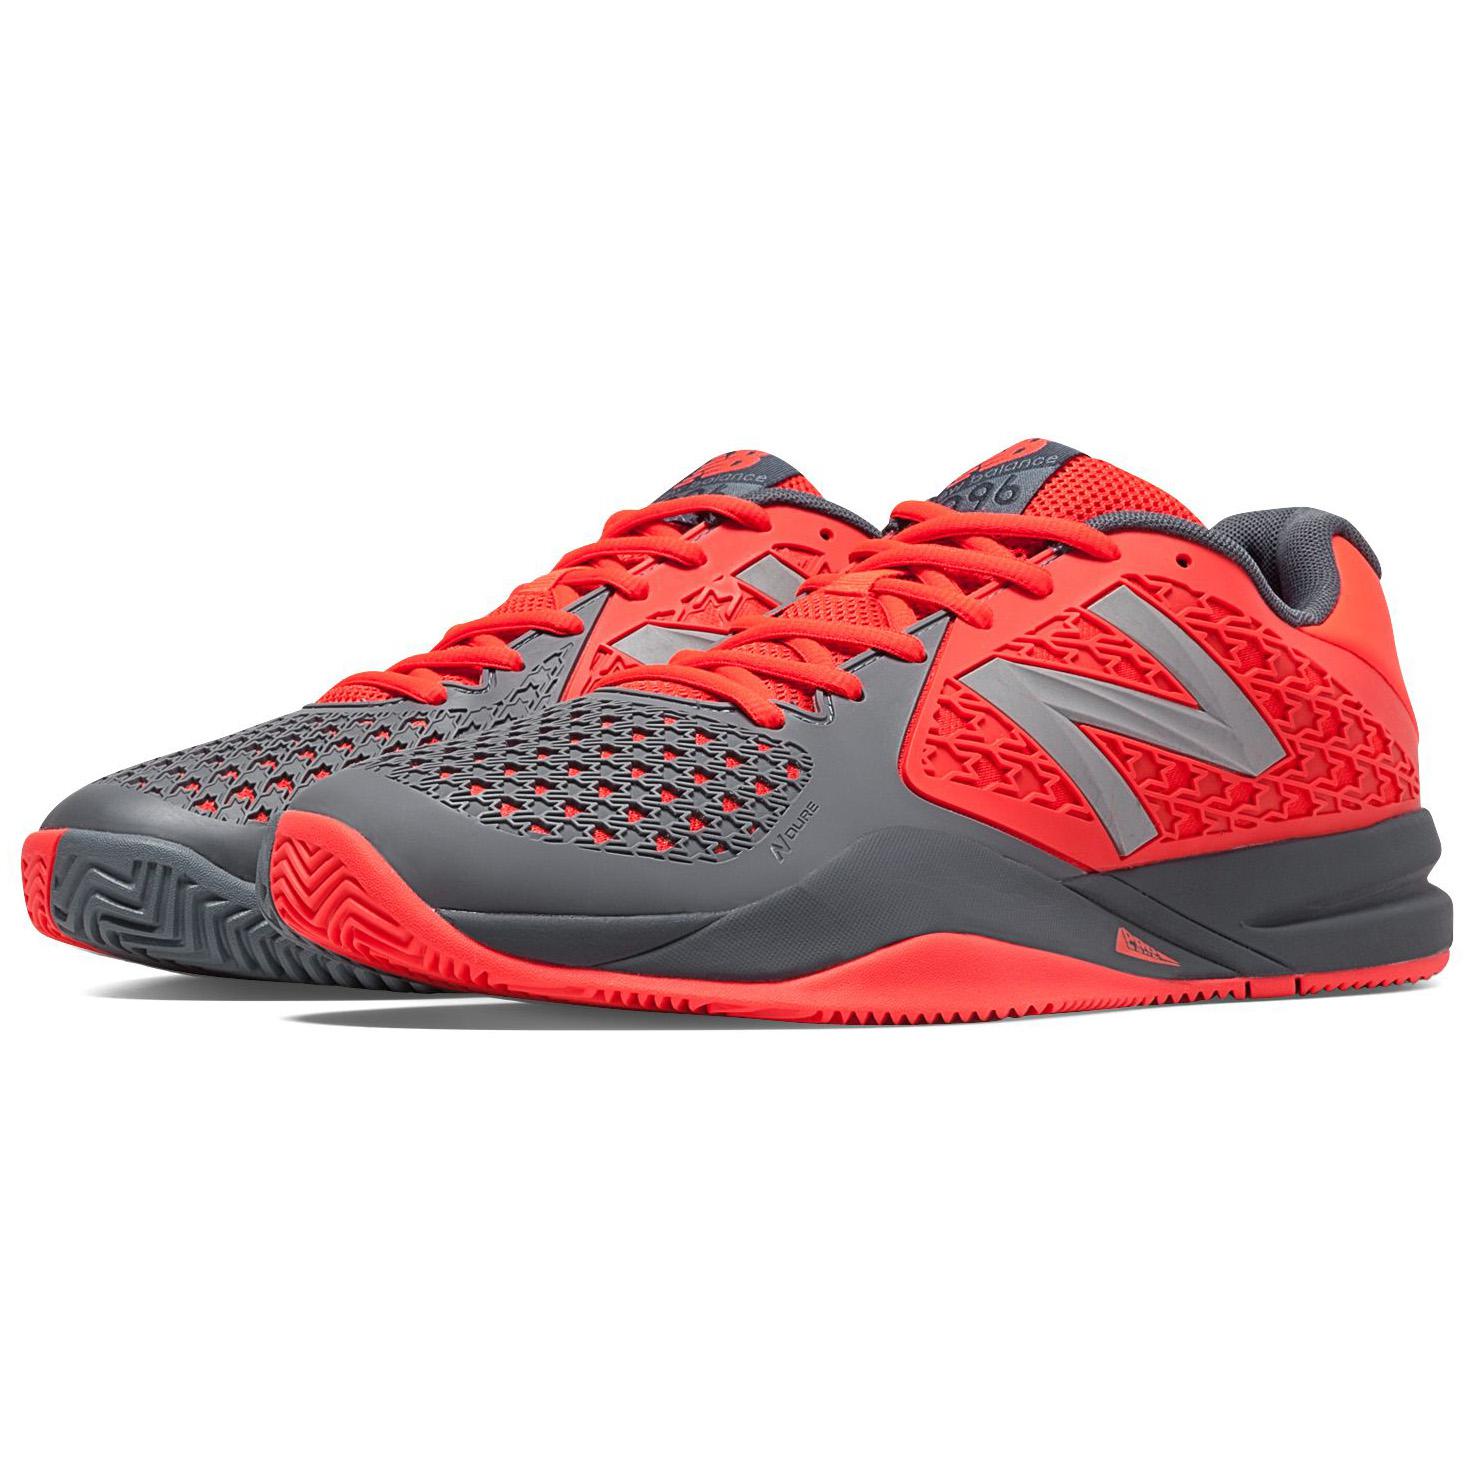 New Balance Tennis Shoes - Red/Grey (D) - Tennisnuts.com